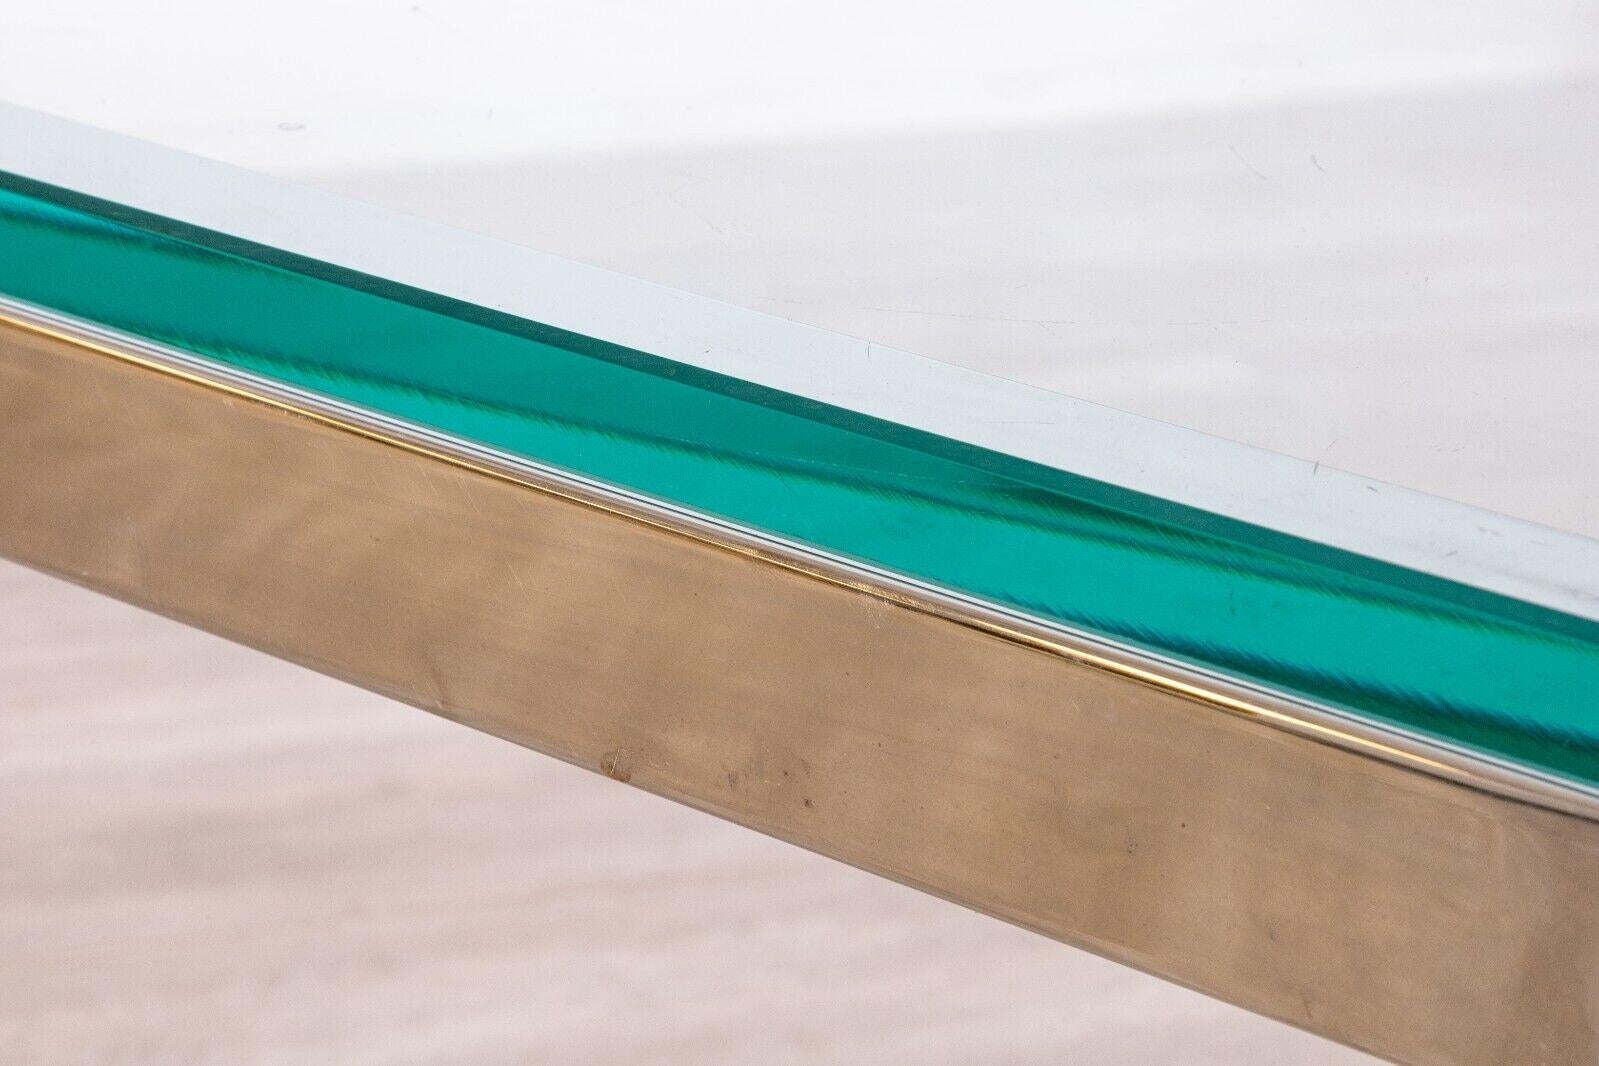 Milo Baughman Contemporary Modern Rectangular Chrome and Glass Coffee Table 1